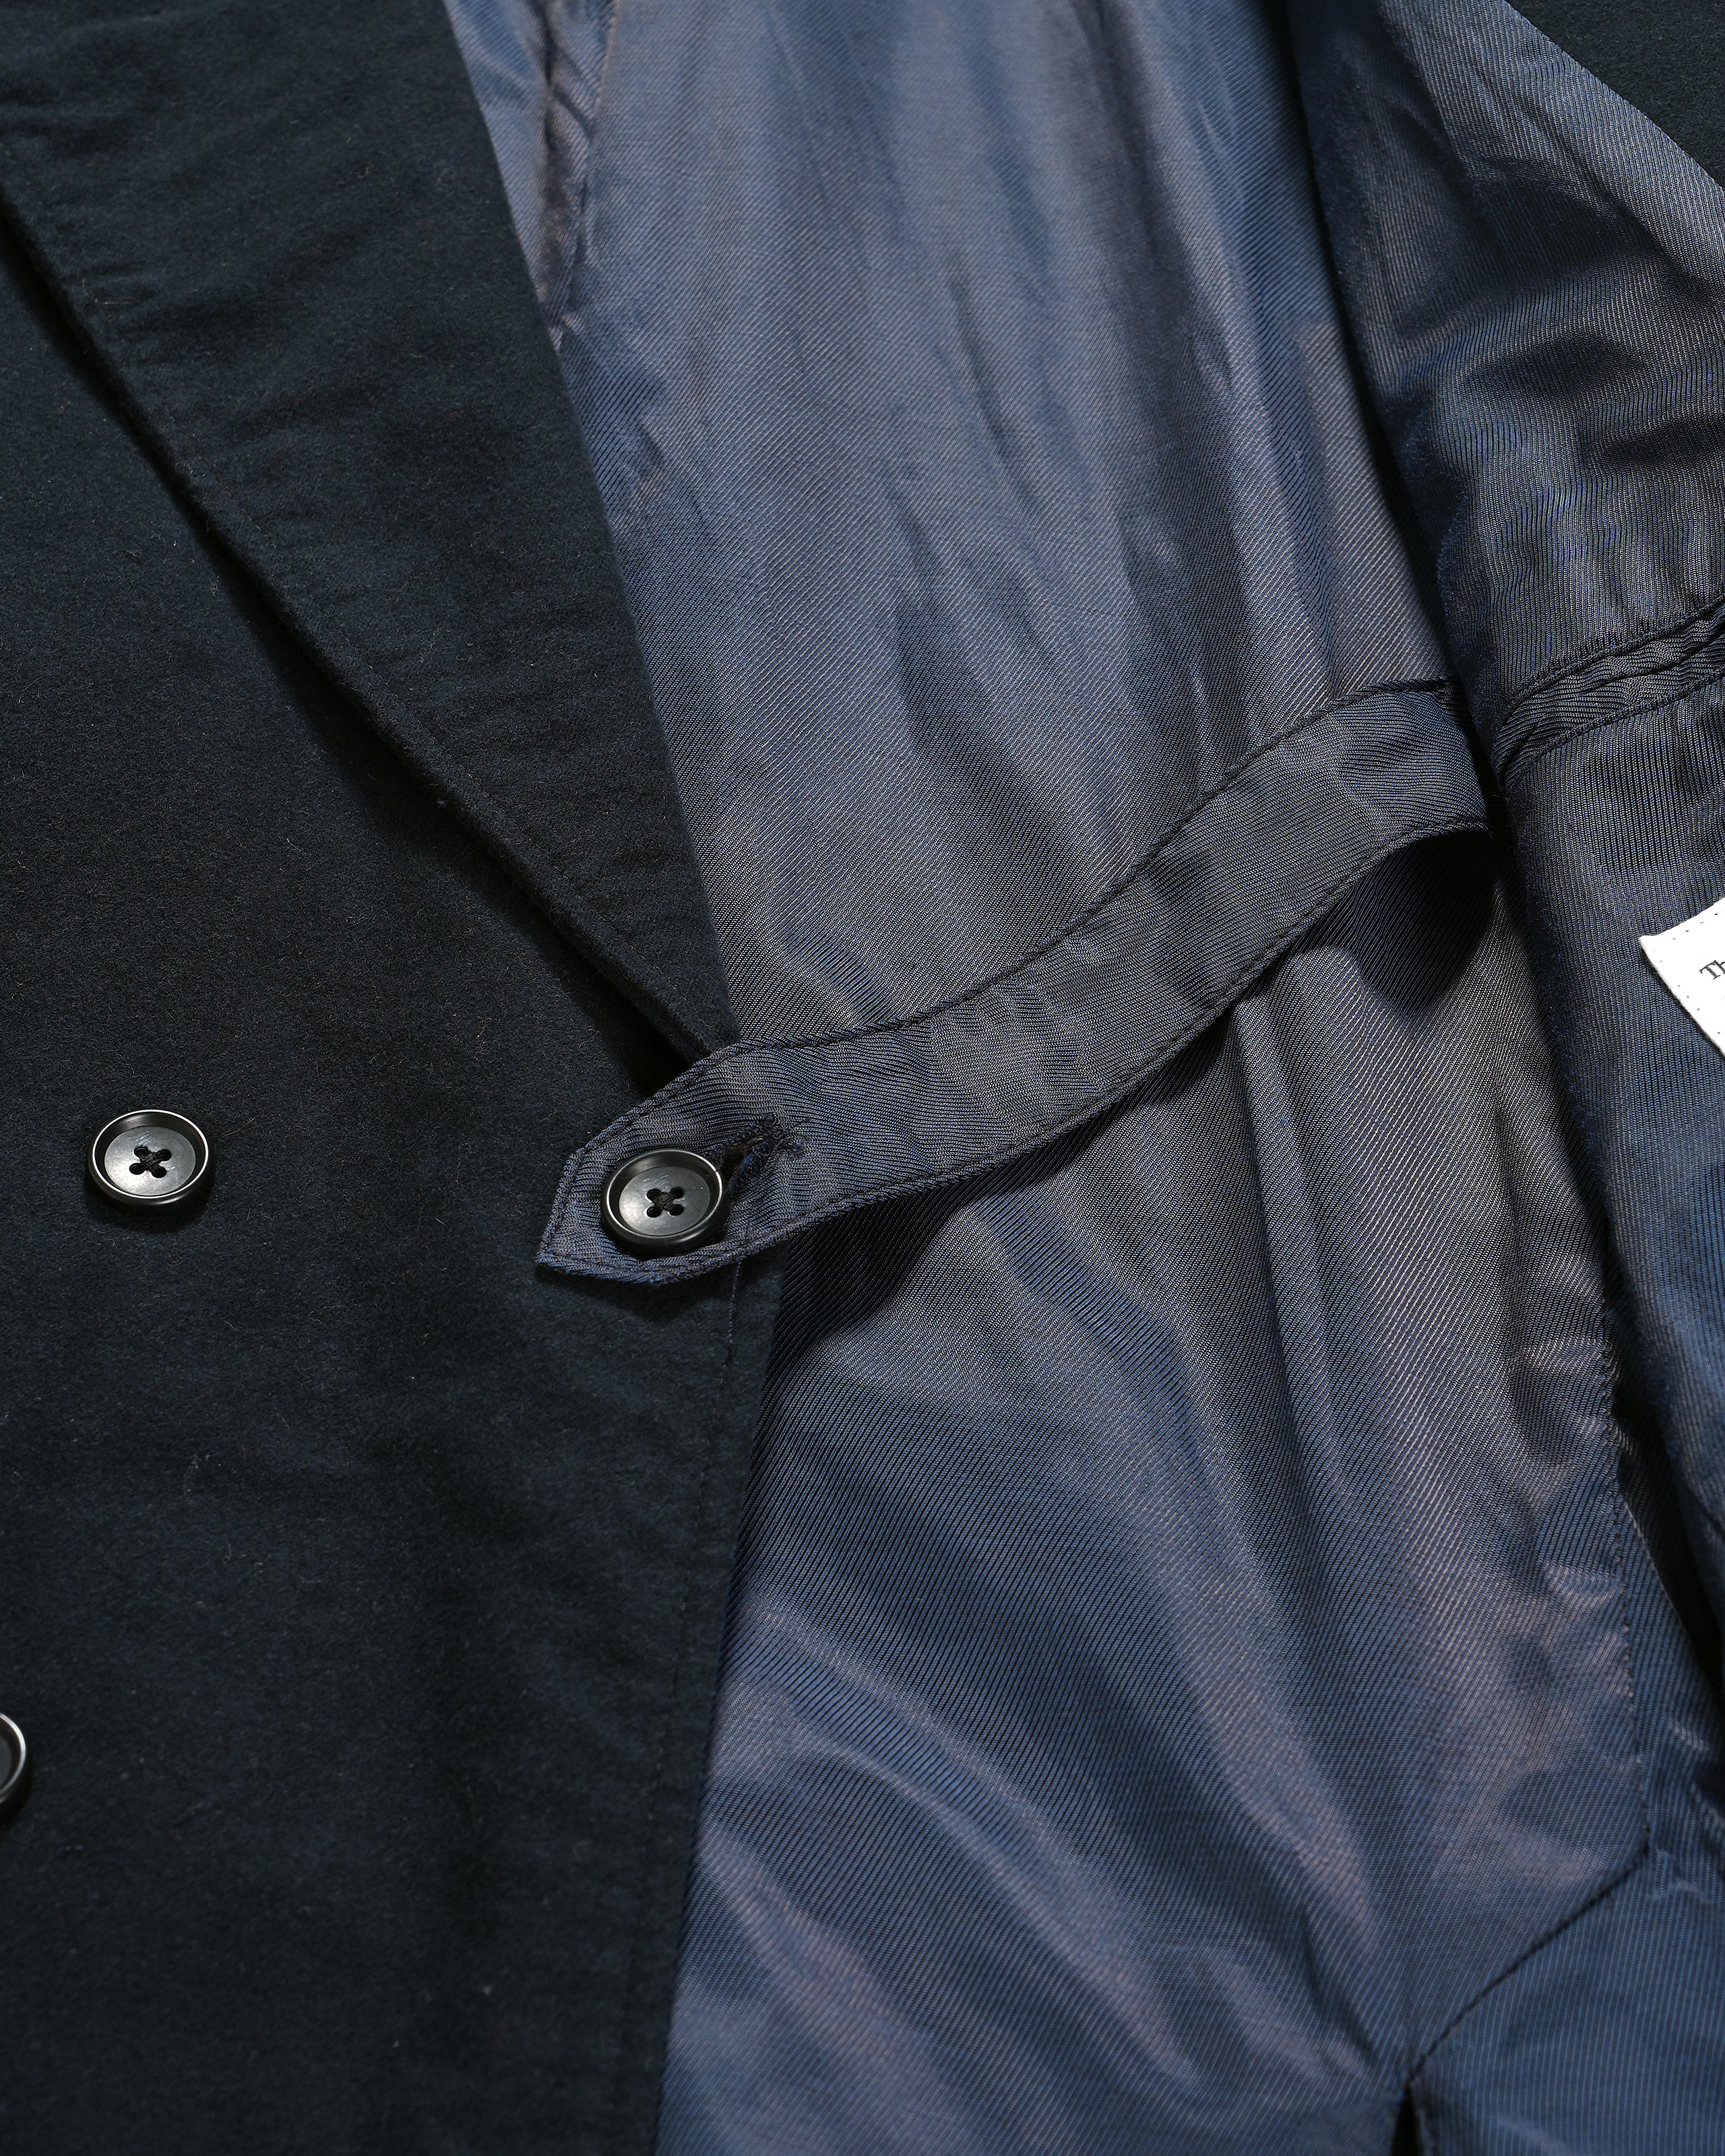 DB Jacket - Dk. Navy Cotton Moleskin